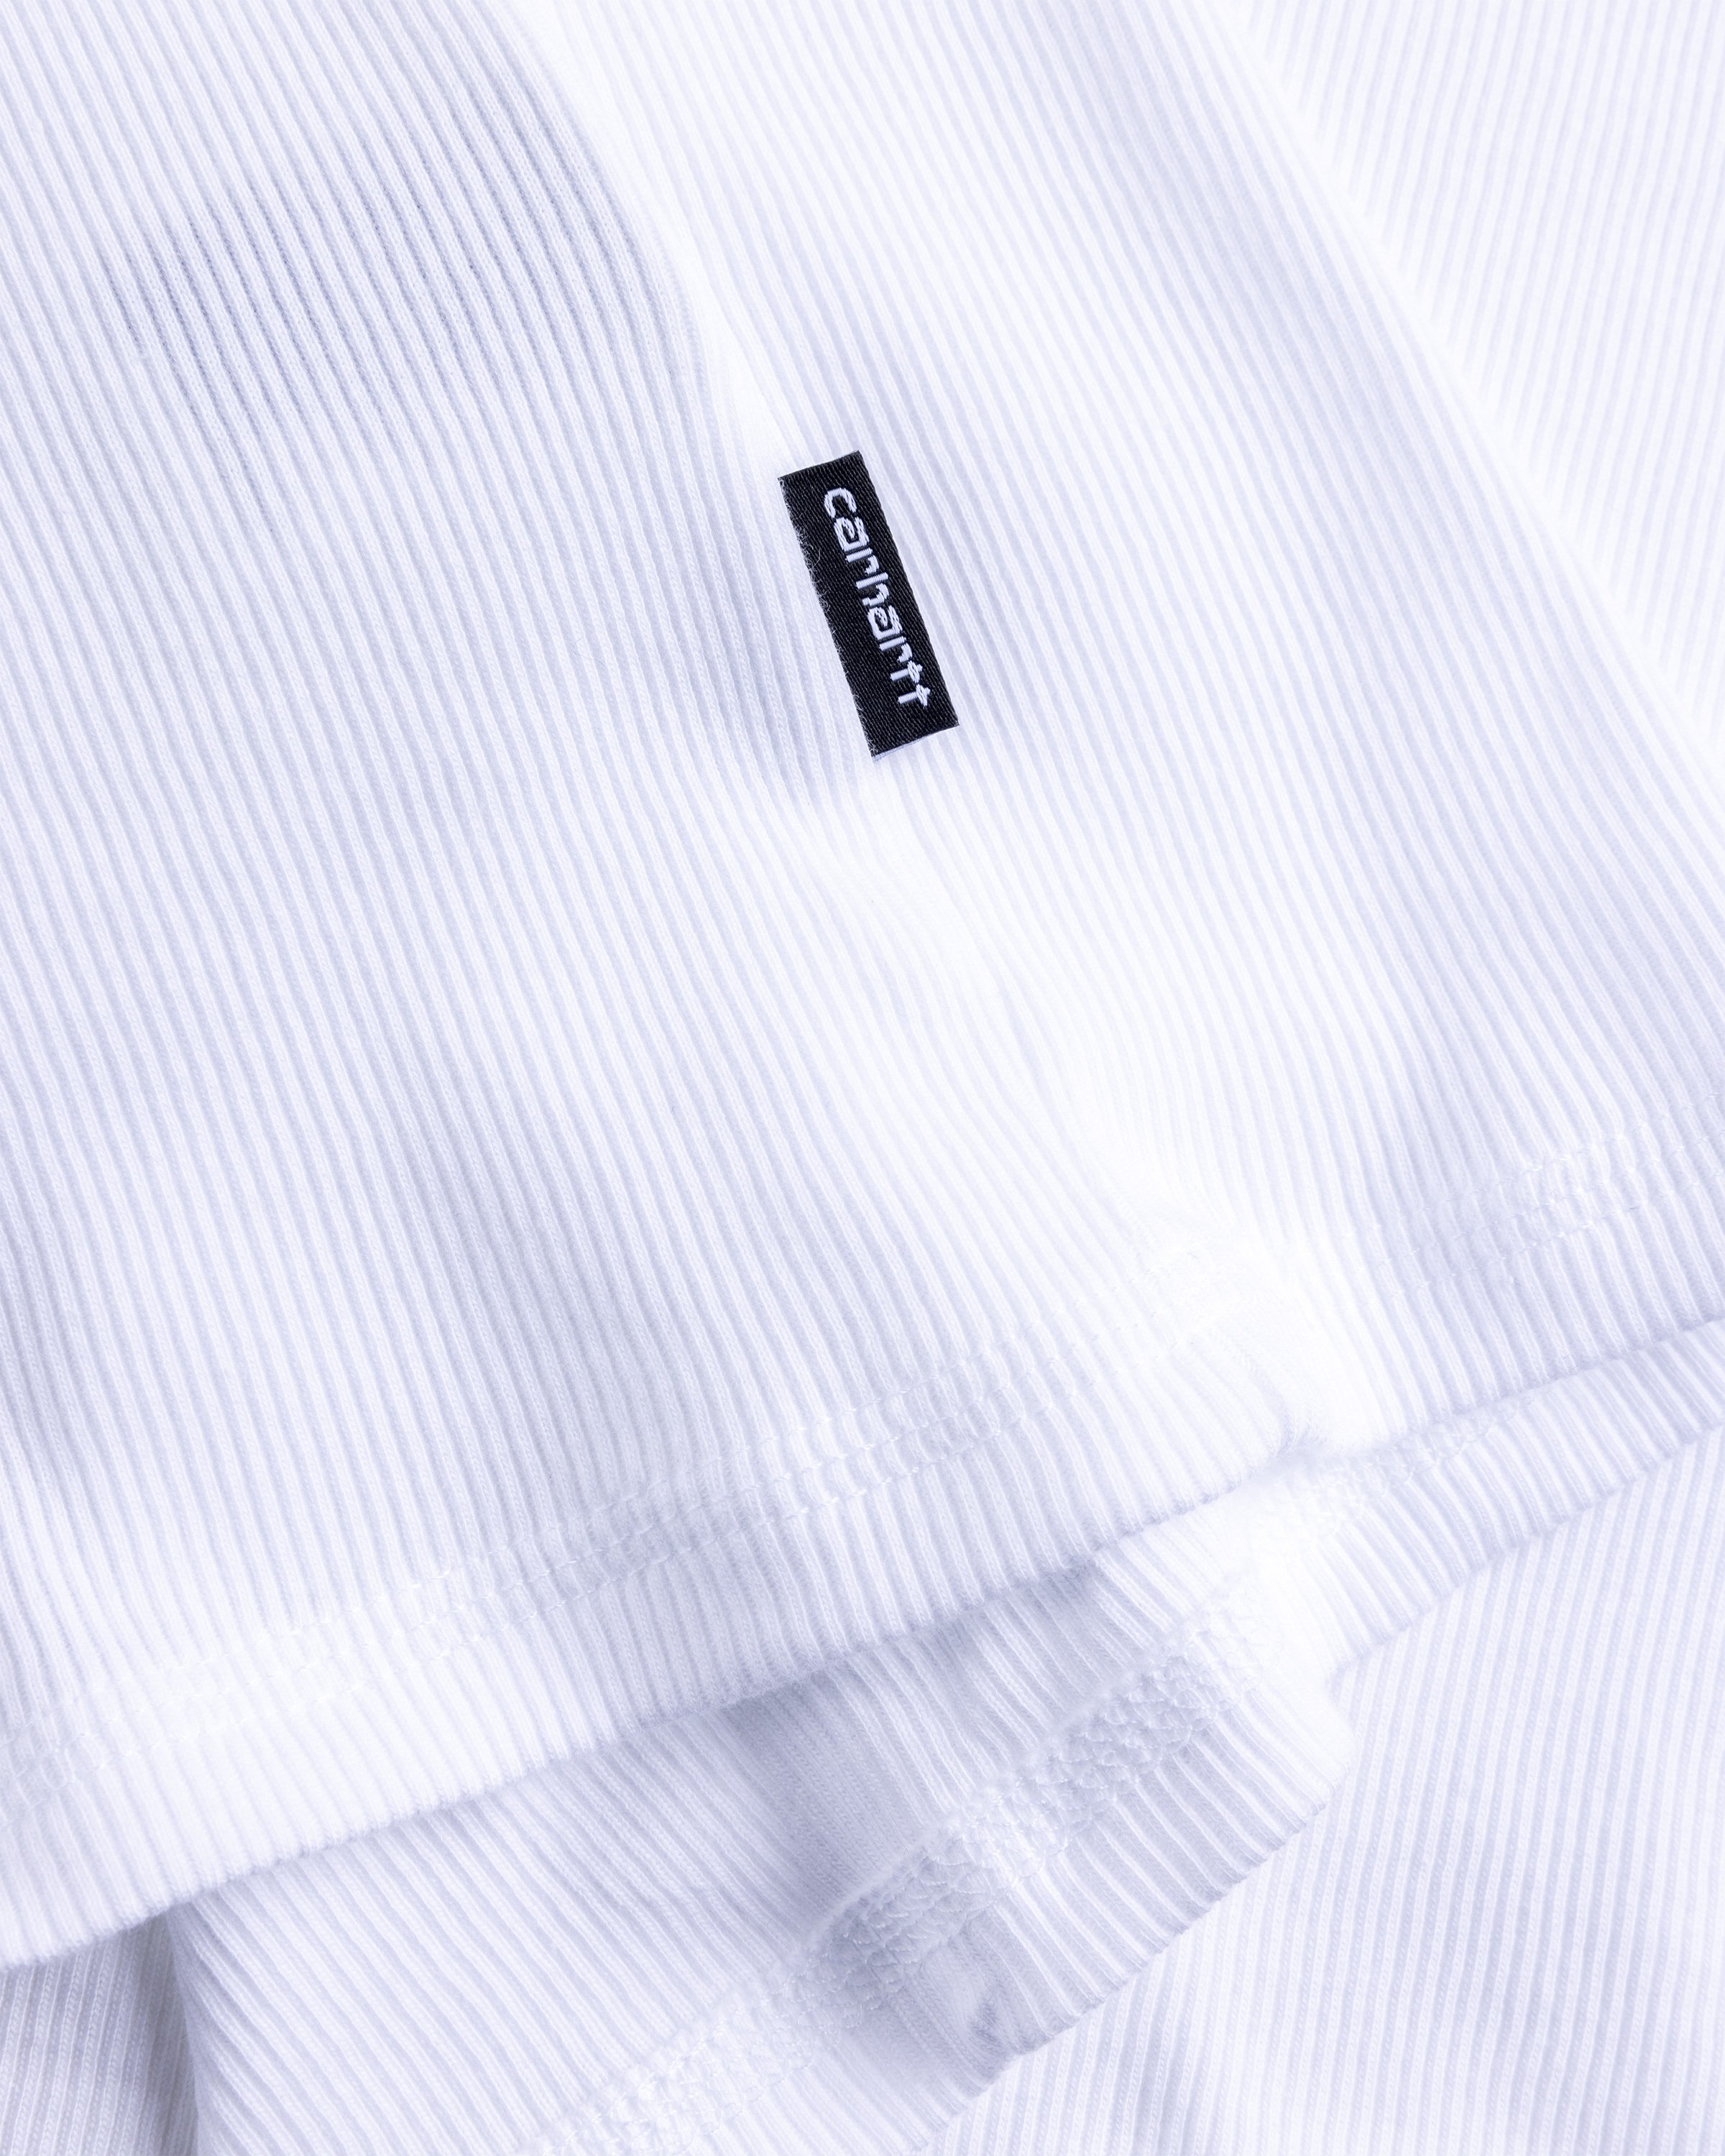 Carhartt WIP - AShirt White + White - Clothing - White - Image 7